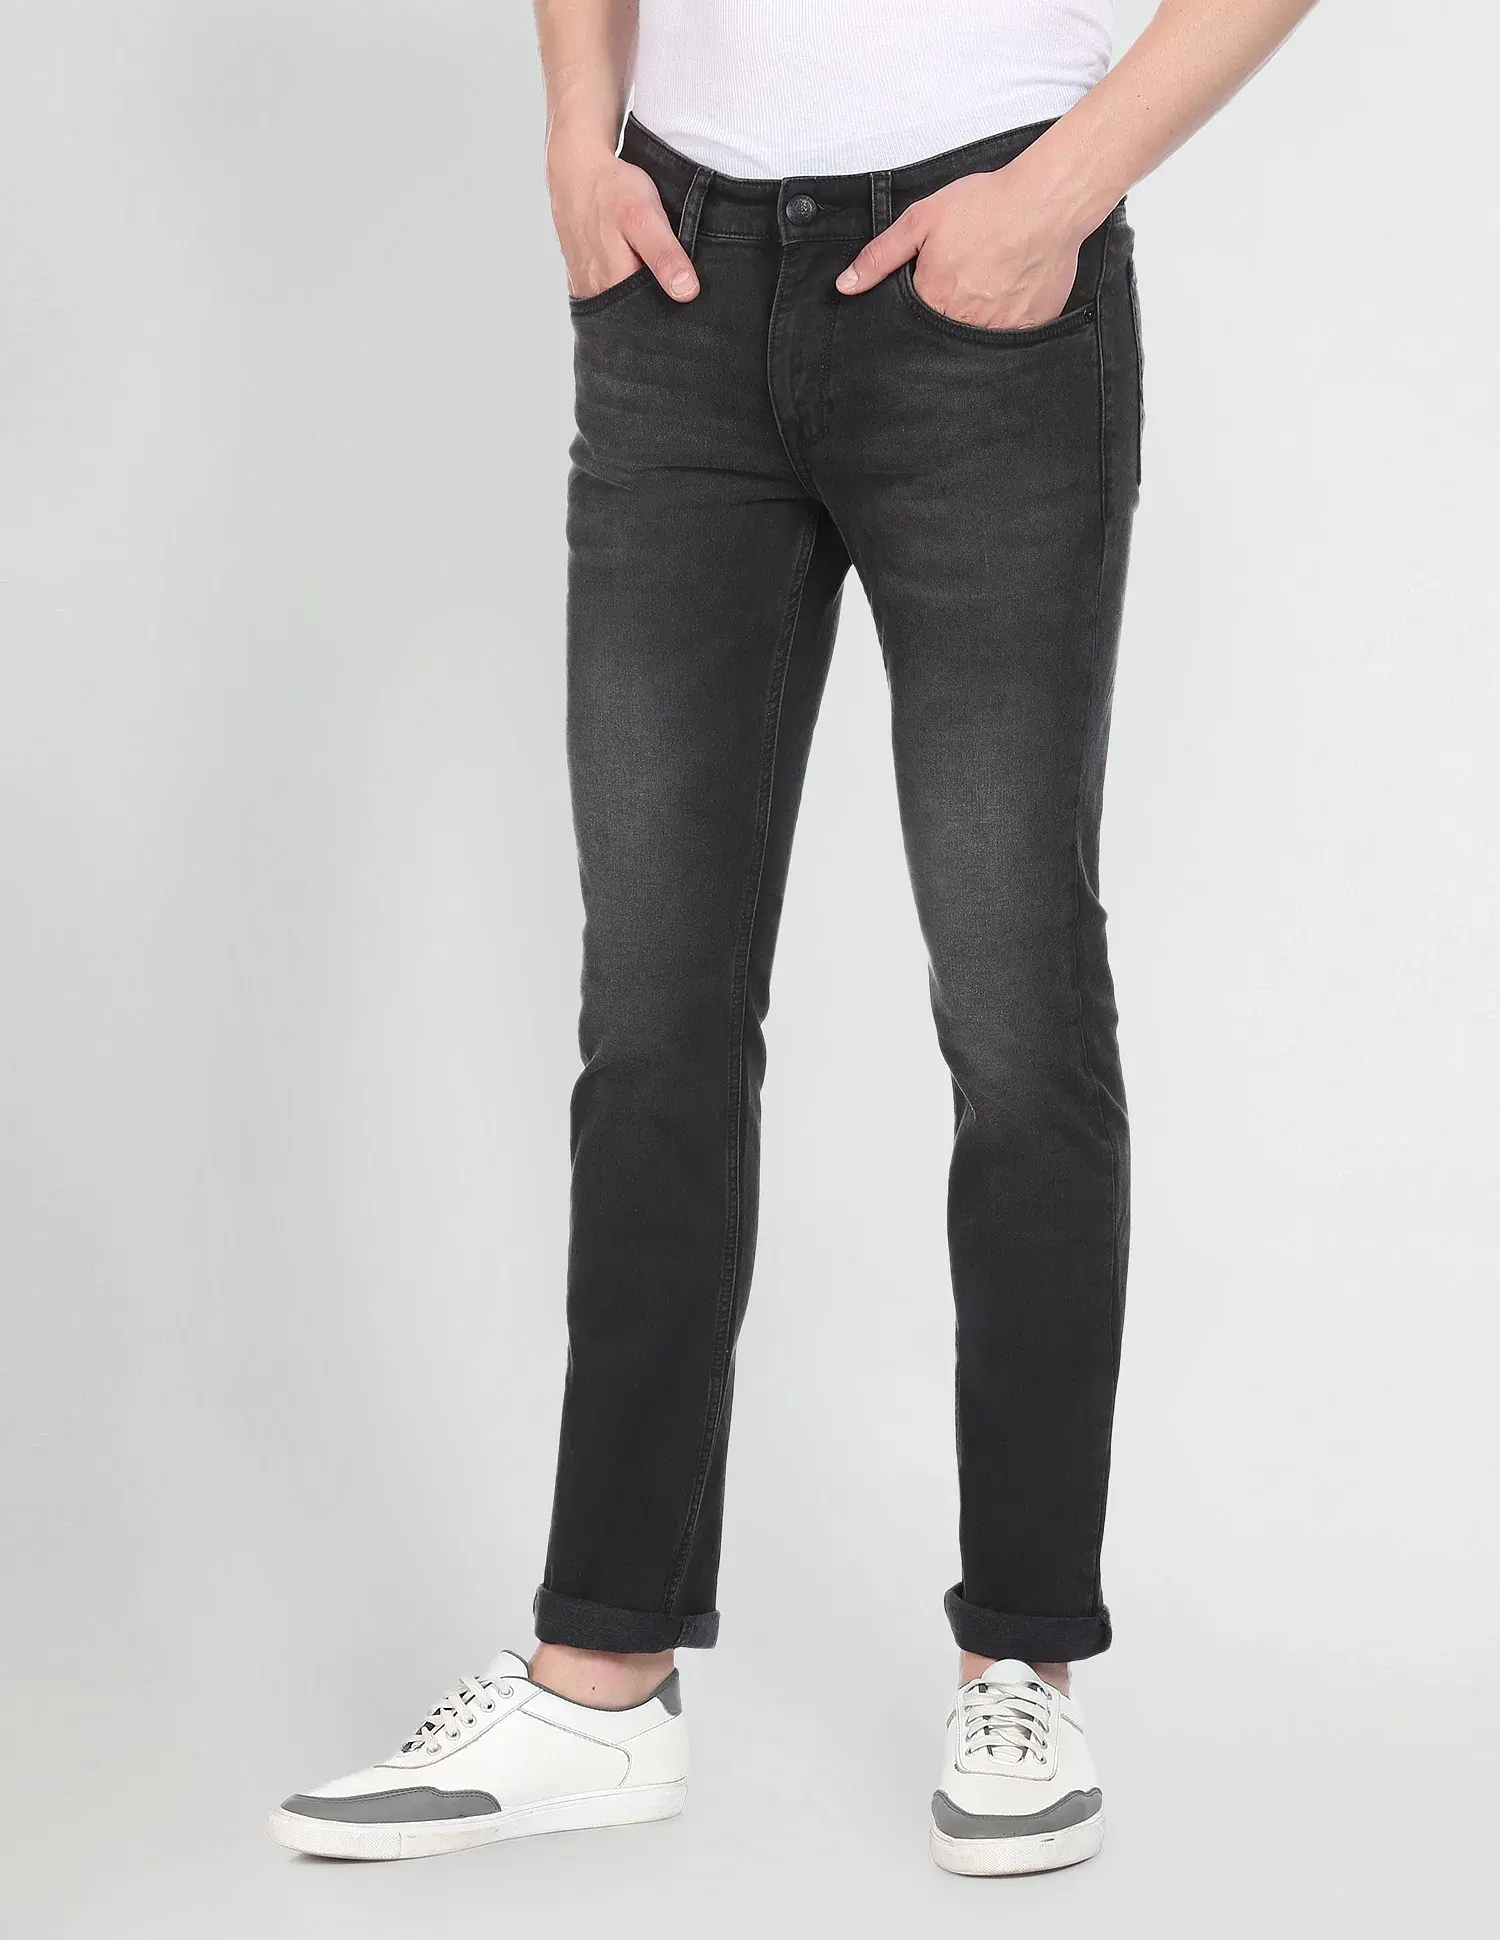 U.S. POLO ASSN. DENIM CO. Regallo Skinny Fit Stone Wash Jeans black